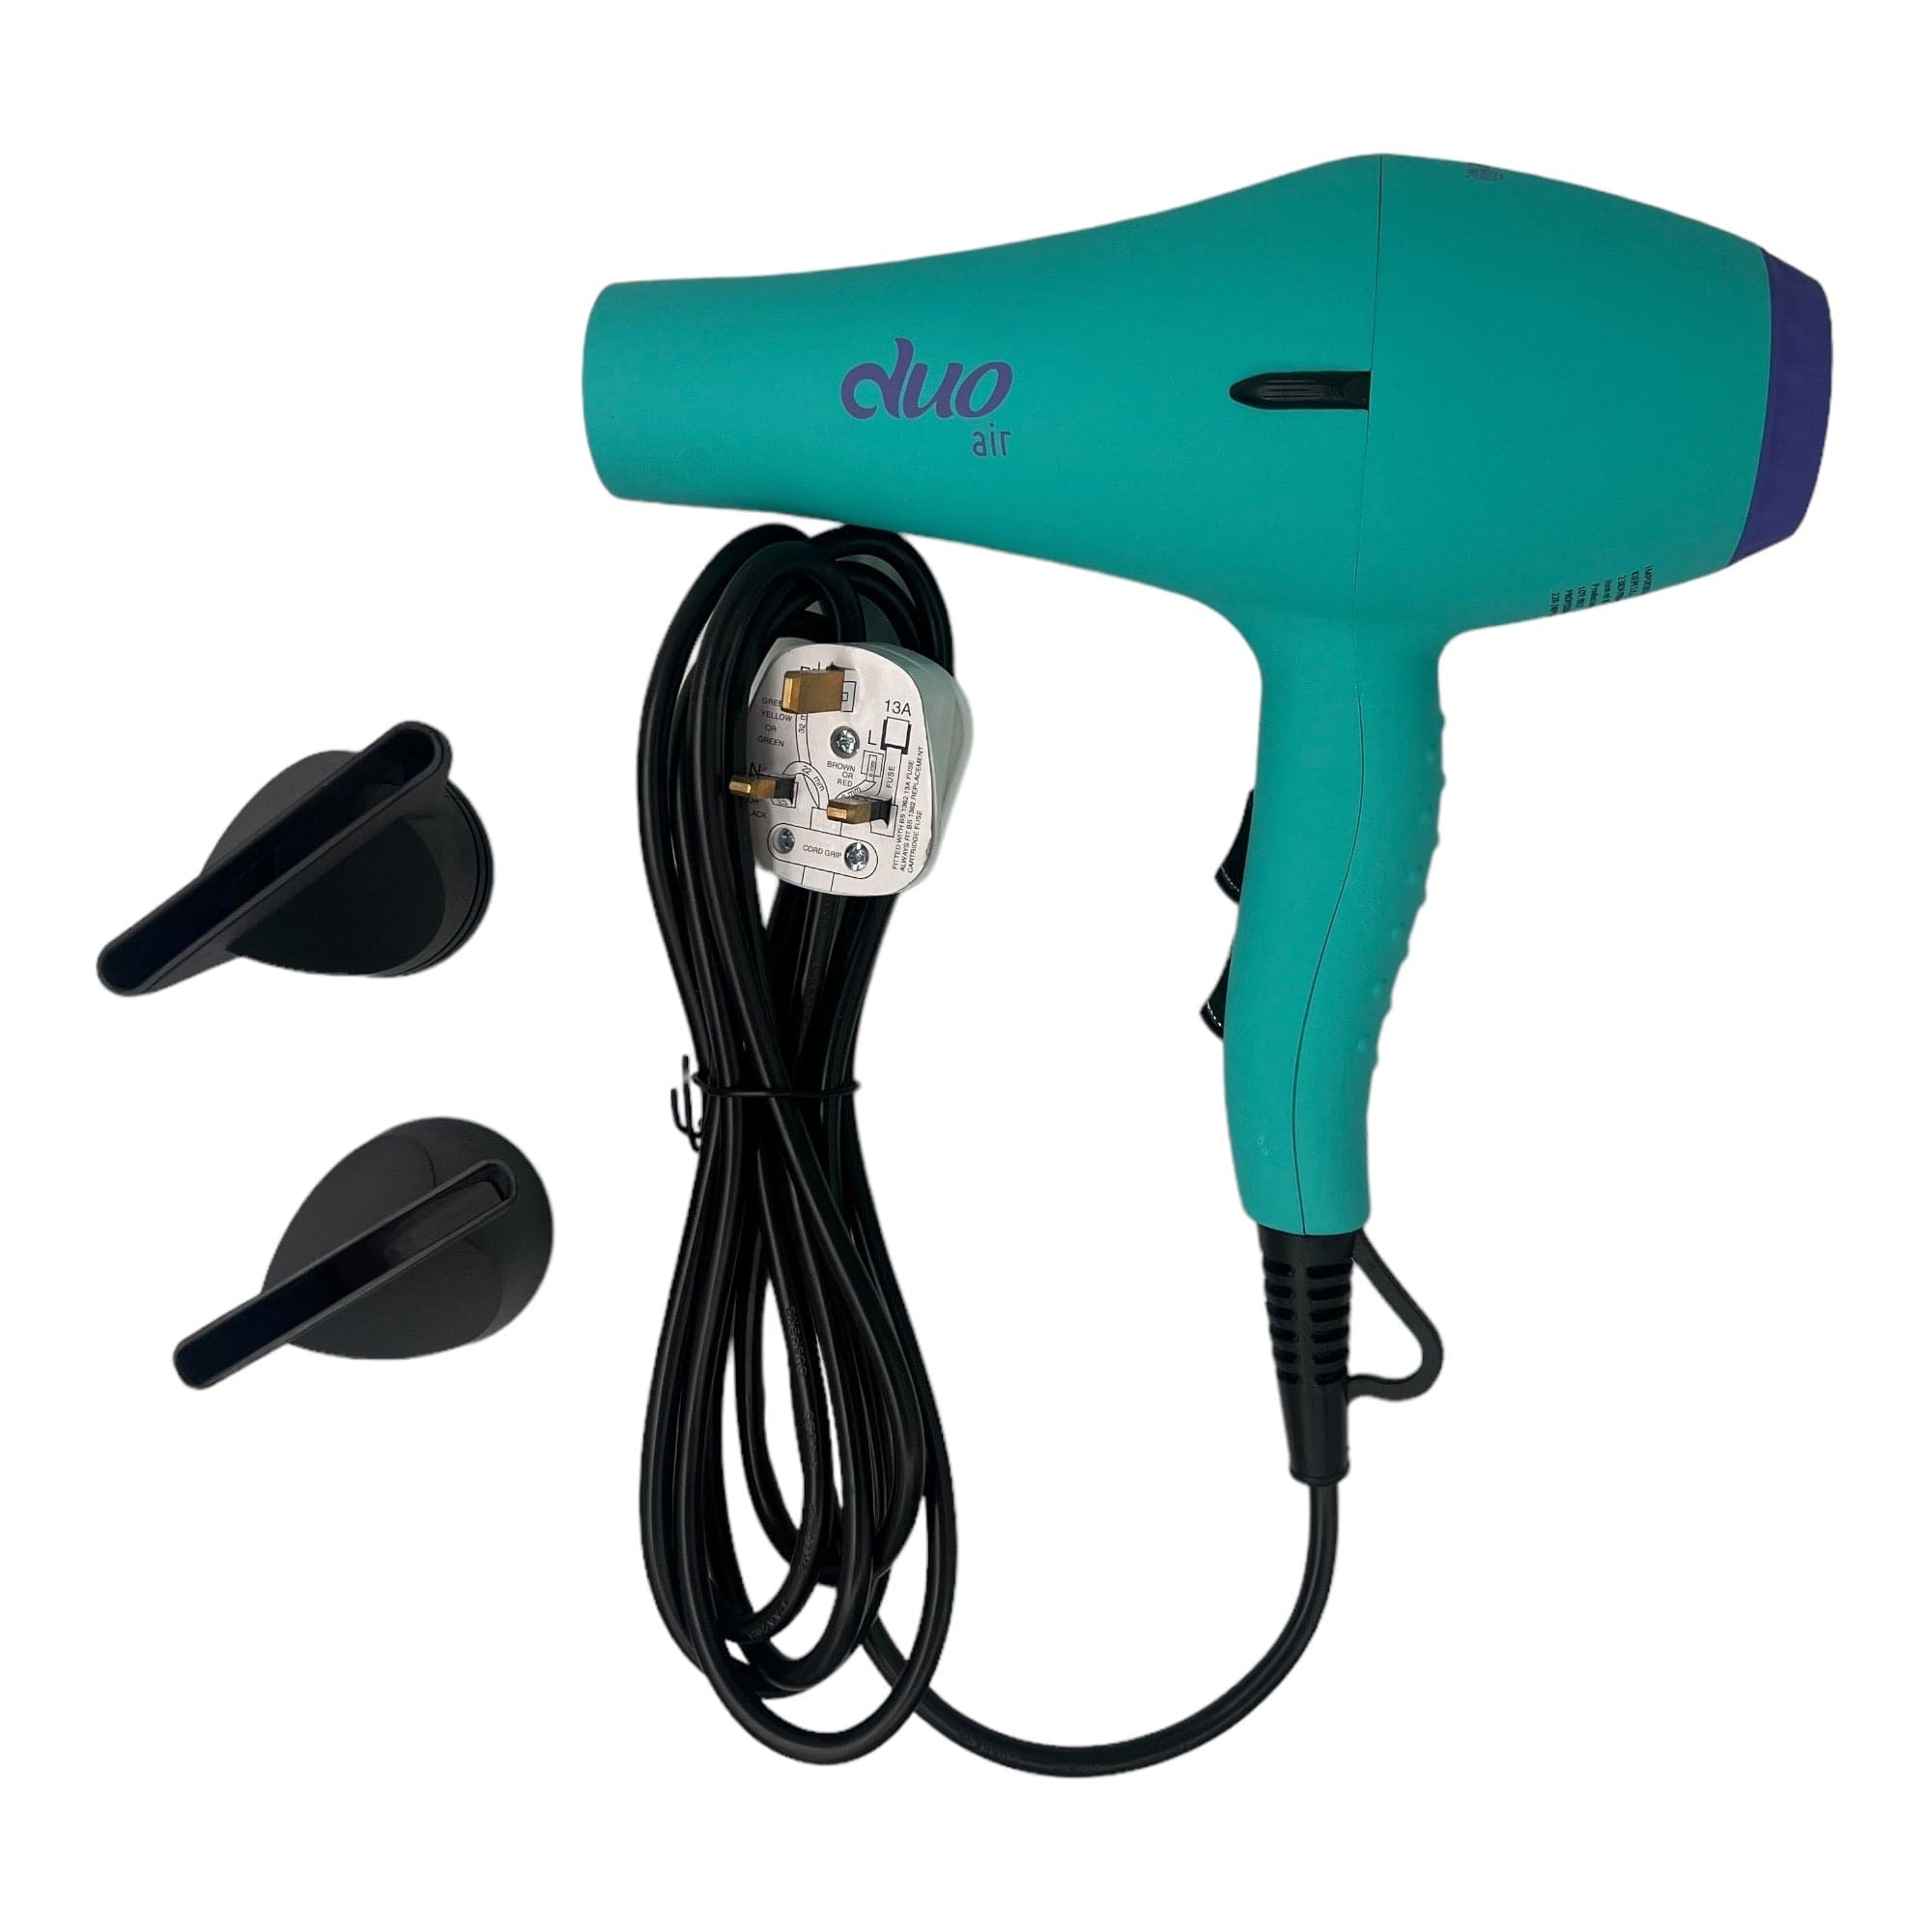 Kiepe -  Dou Air Hair Dryer 2400W Green-Purple